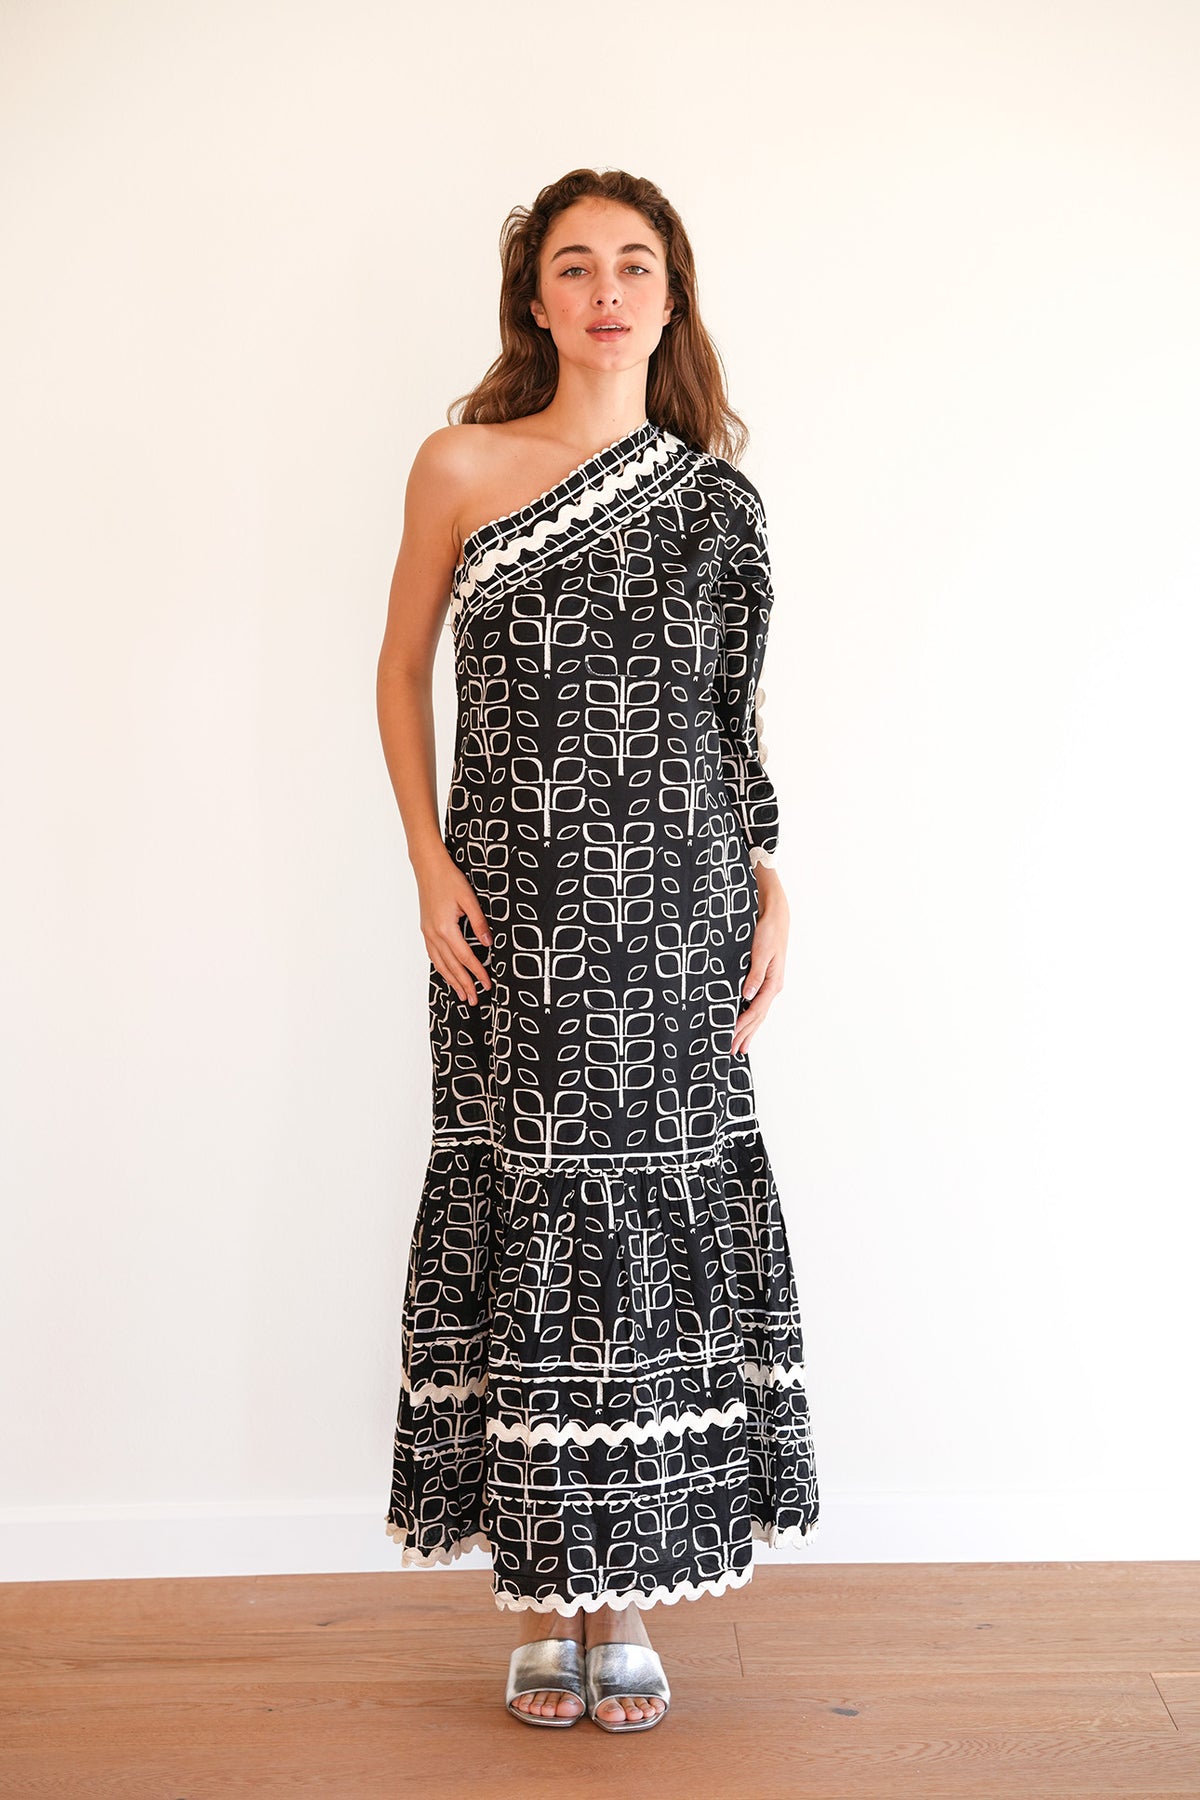 Jaipor Dress - Black/White Print